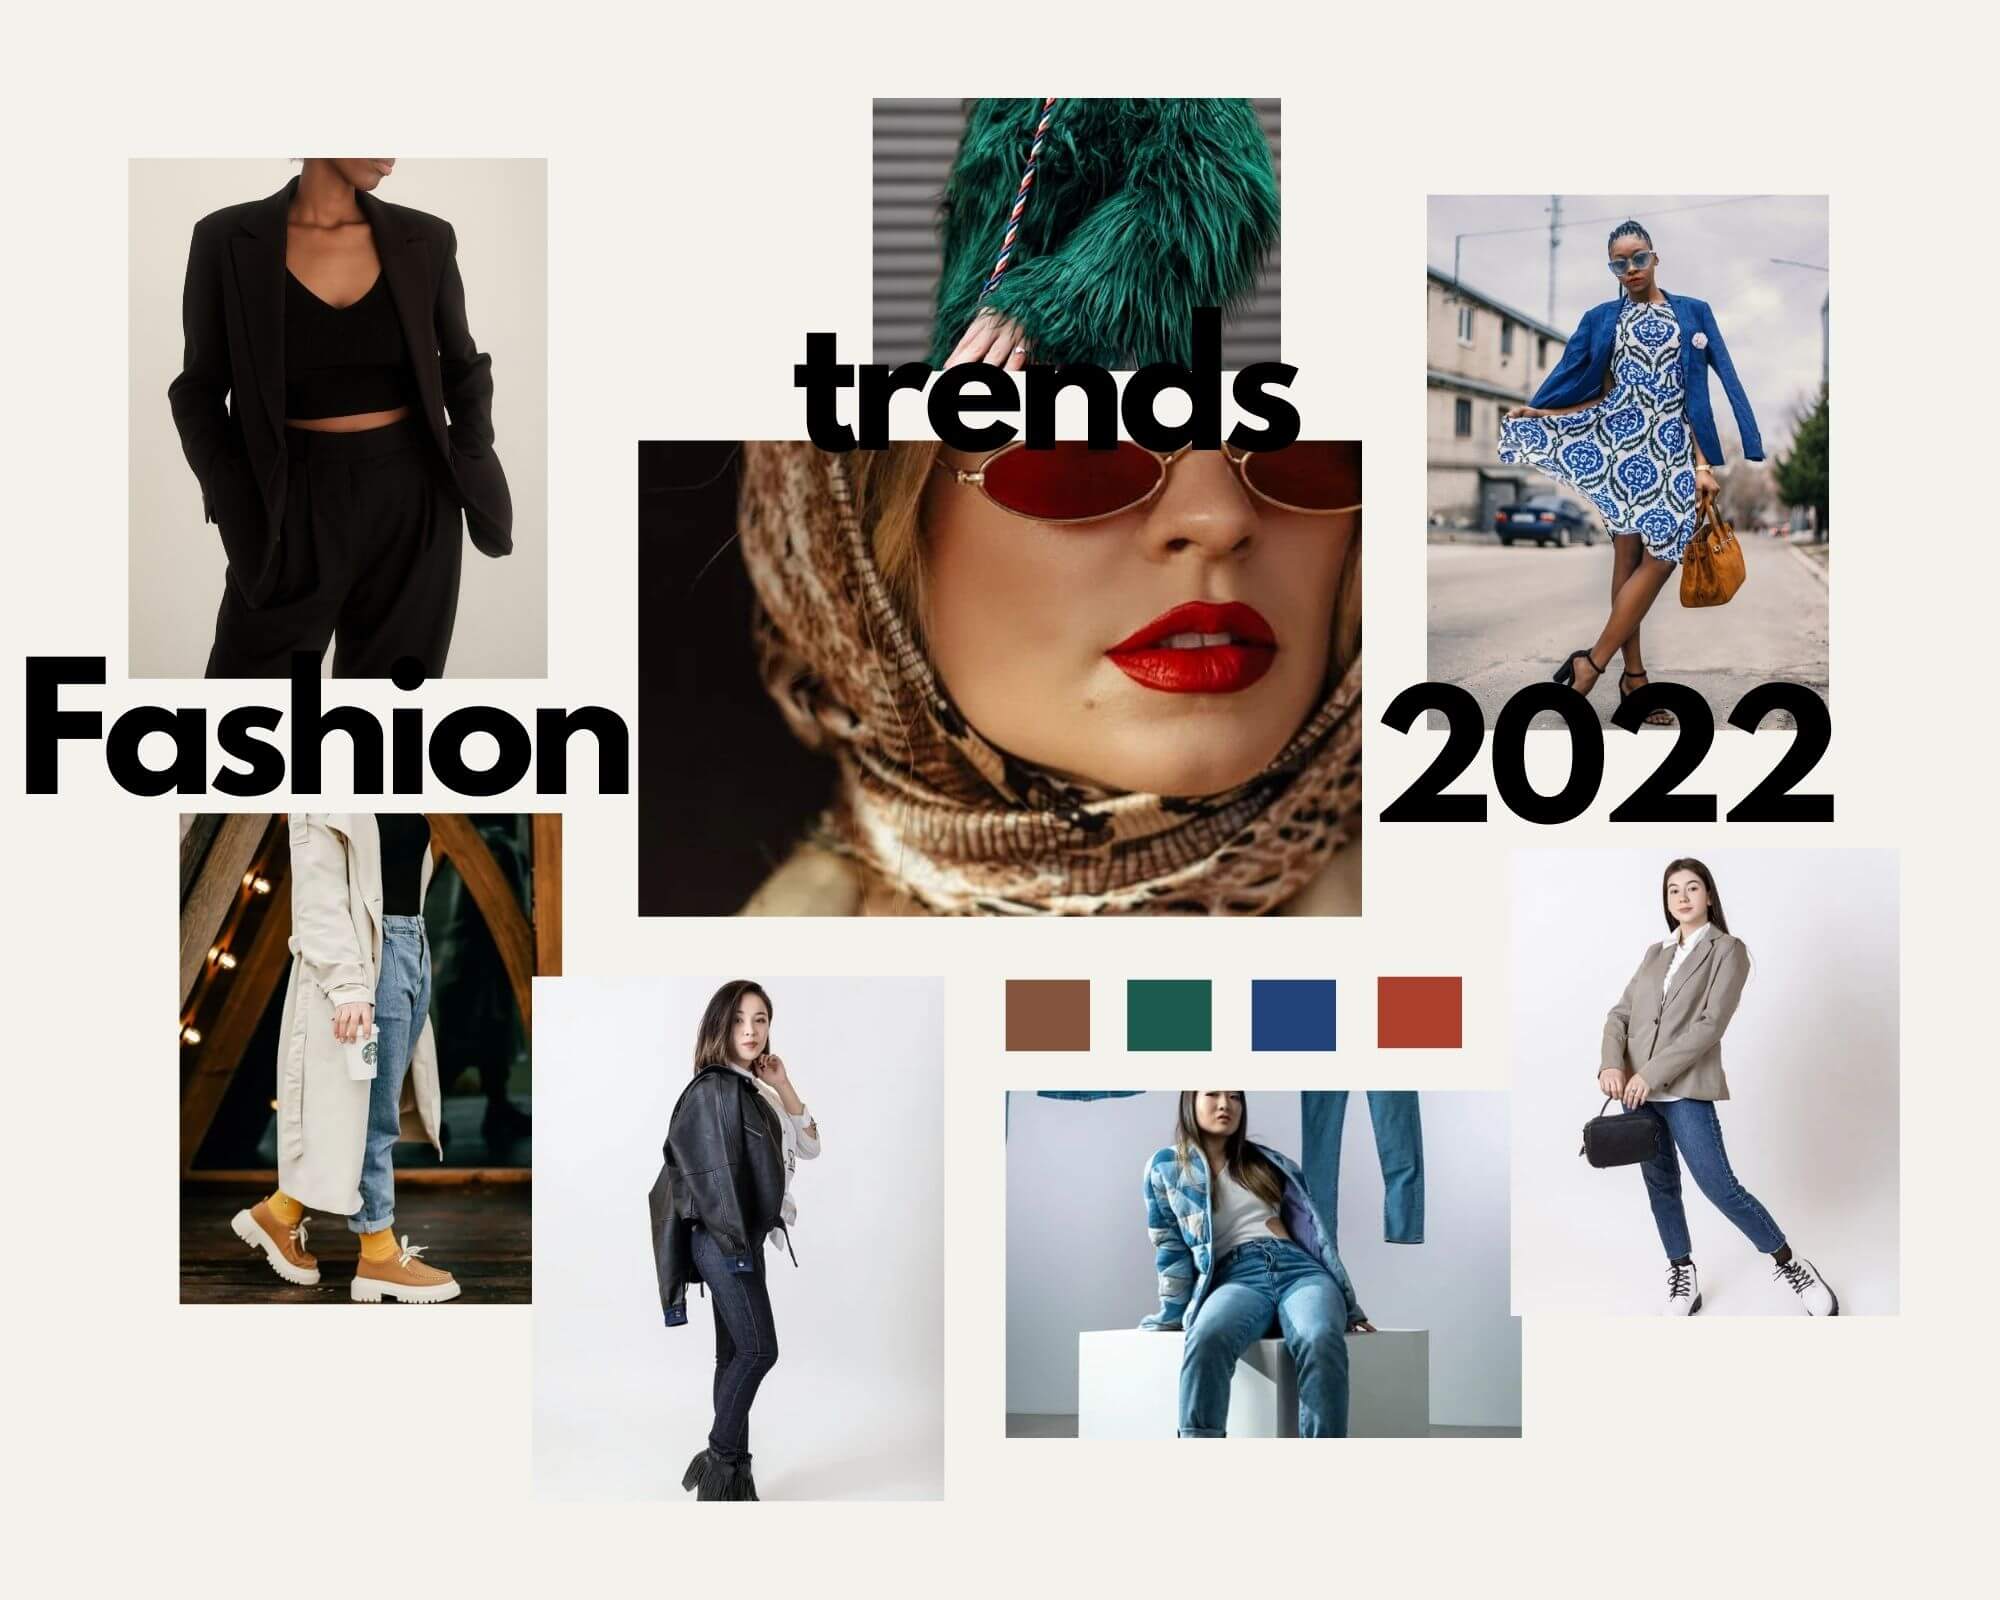 2022 Fashion Trends